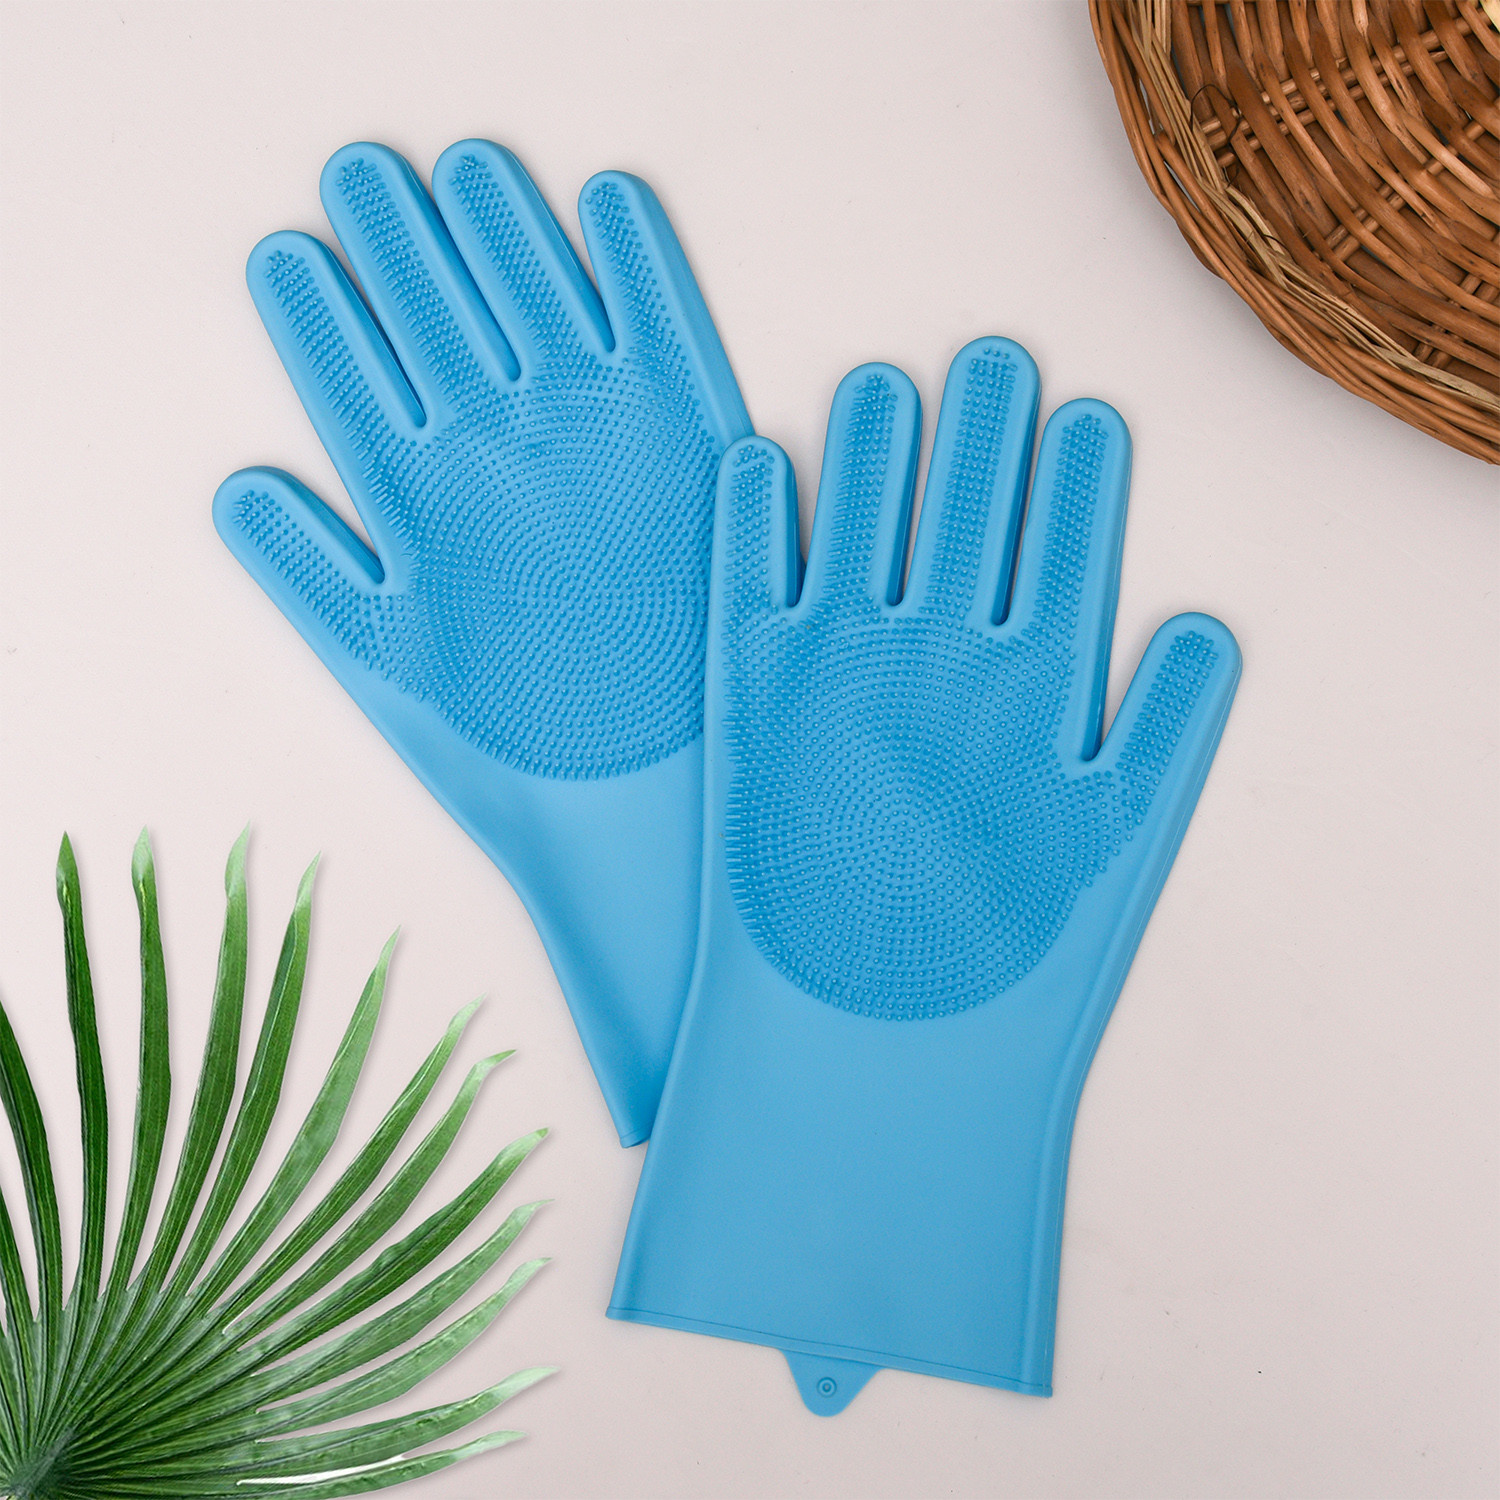 Kuber Industries Kitchen Gloves|Silicone Kitchen Dish Washing Gloves|Scrubbing Gloves For Kitchen|Car Cleaning Gloves|Bathroom Cleaning Gloves|1 Pair (Sky Blue)